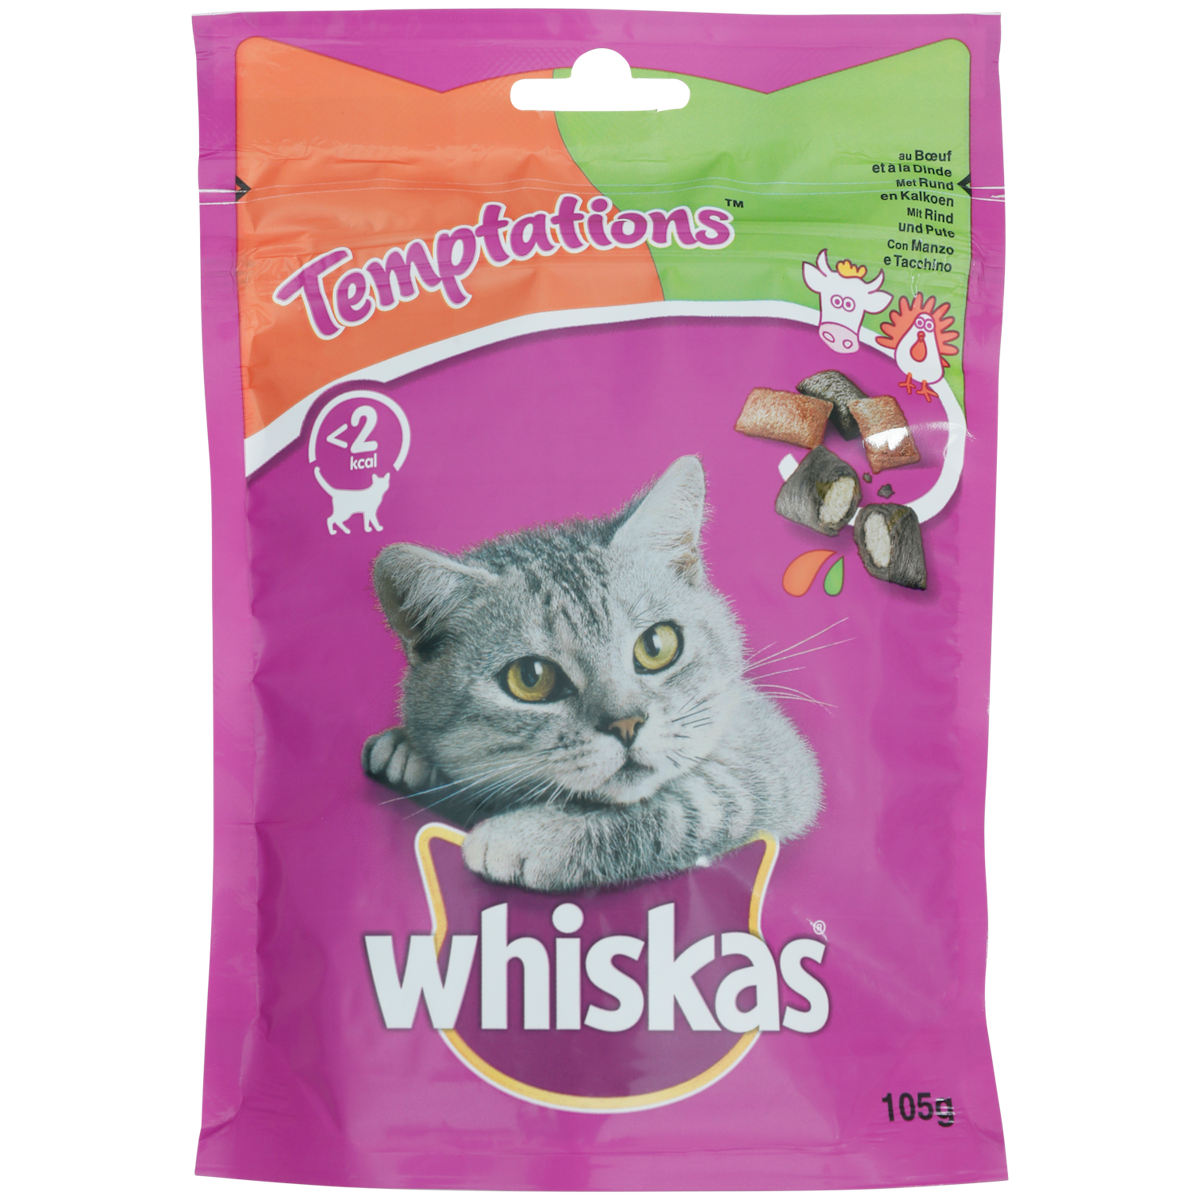 Whiskas Temptations kattensnoepjes